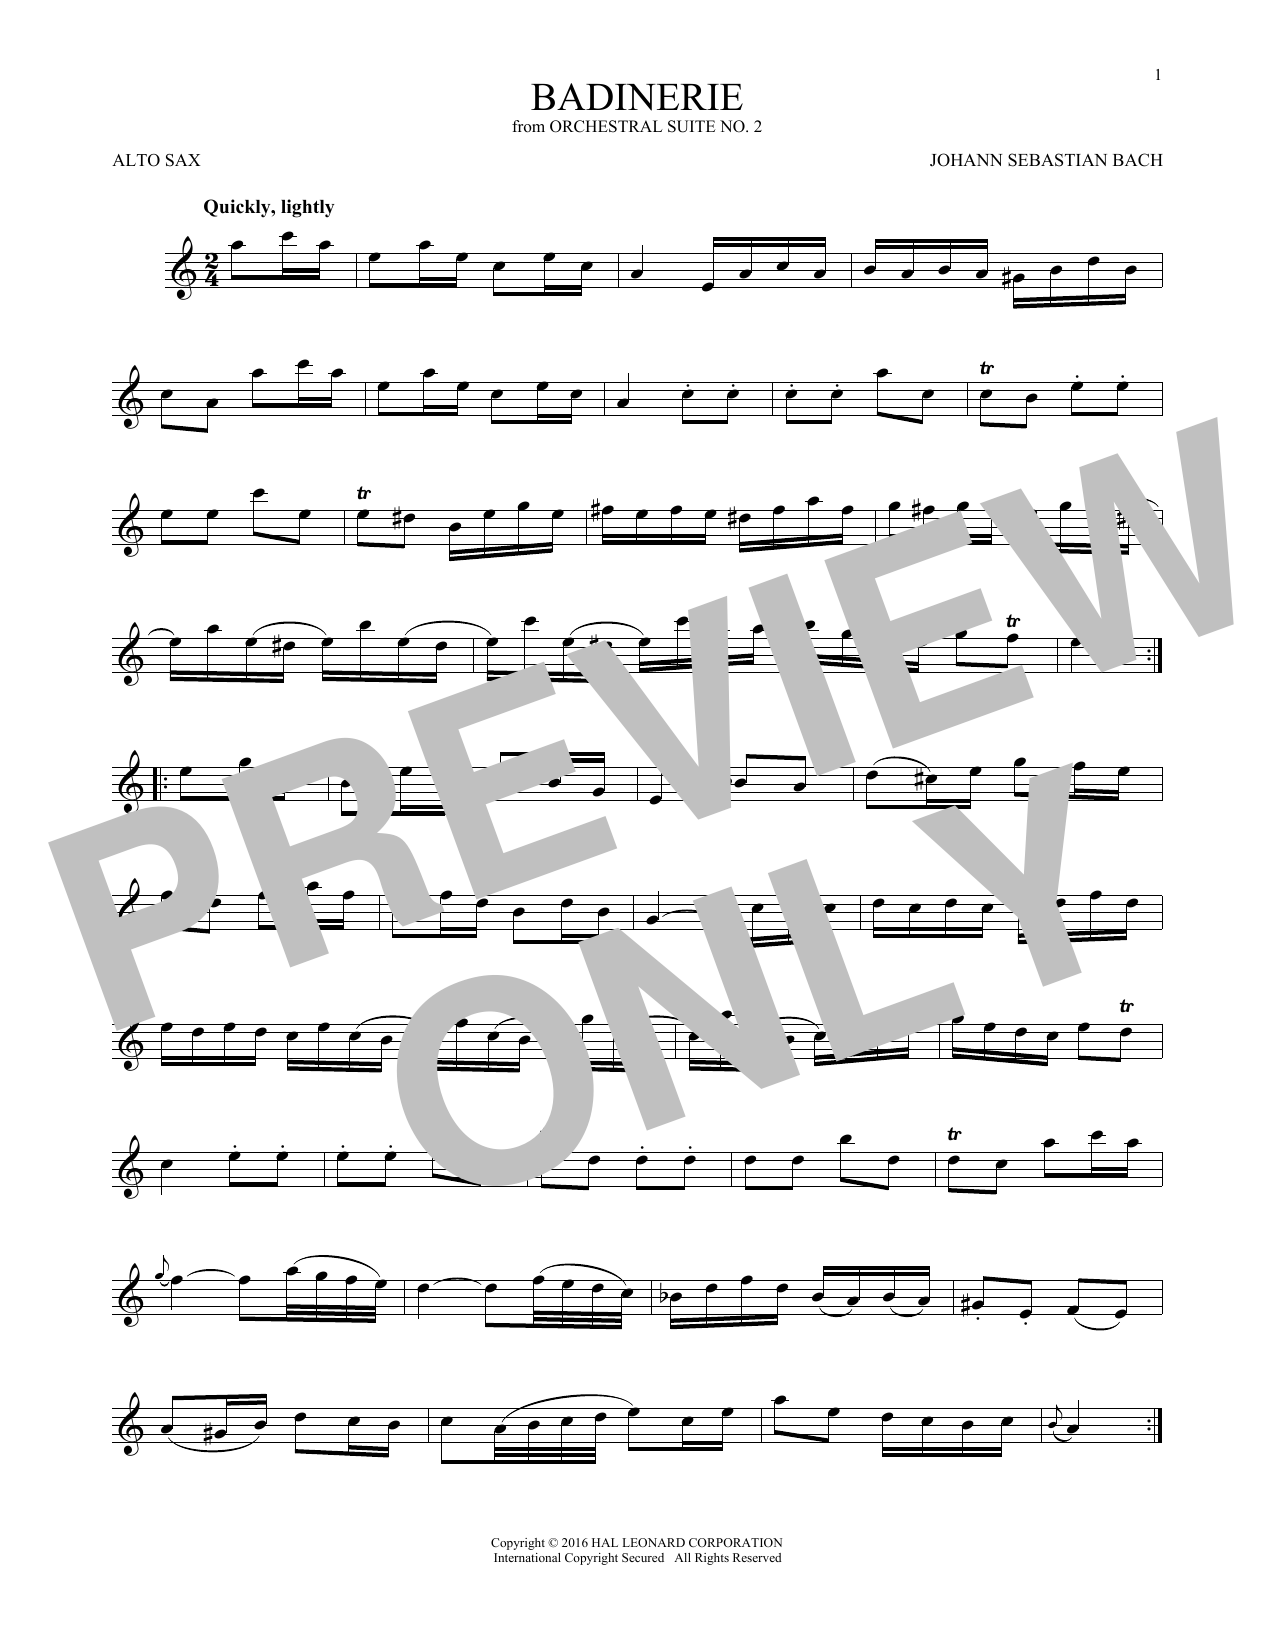 Johann Sebastian Bach Badinerie (Suite No. 2) Sheet Music Notes & Chords for Trombone - Download or Print PDF